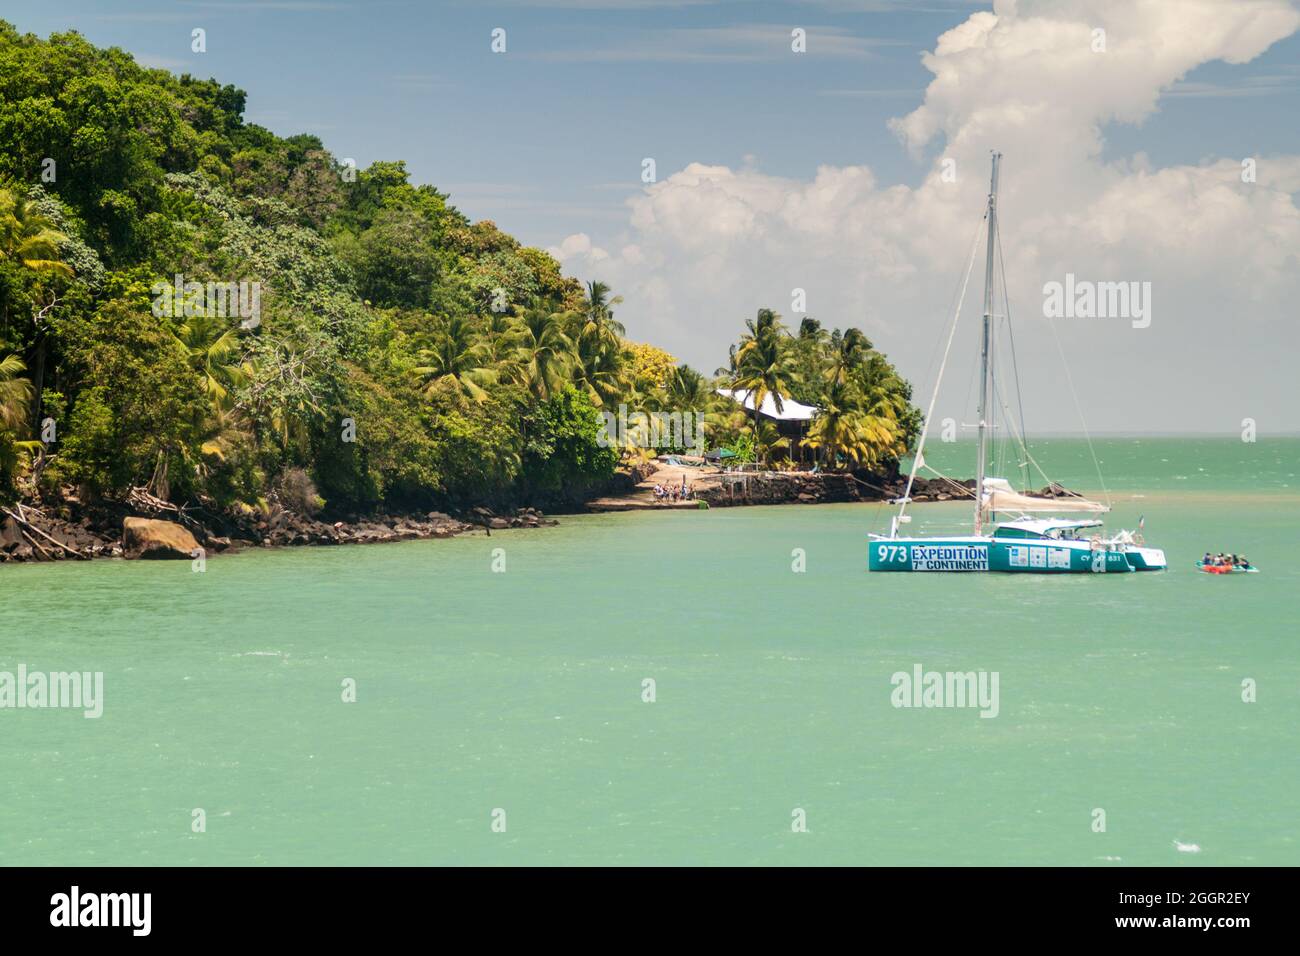 ILE SAINT JOSEPH, FRENCH GUIANA - AUGUST 2, 2015: Catamaran anchored by Ile Saint Joseph, one of the islands of Iles du Salut (Islands of Salvation) i Stock Photo